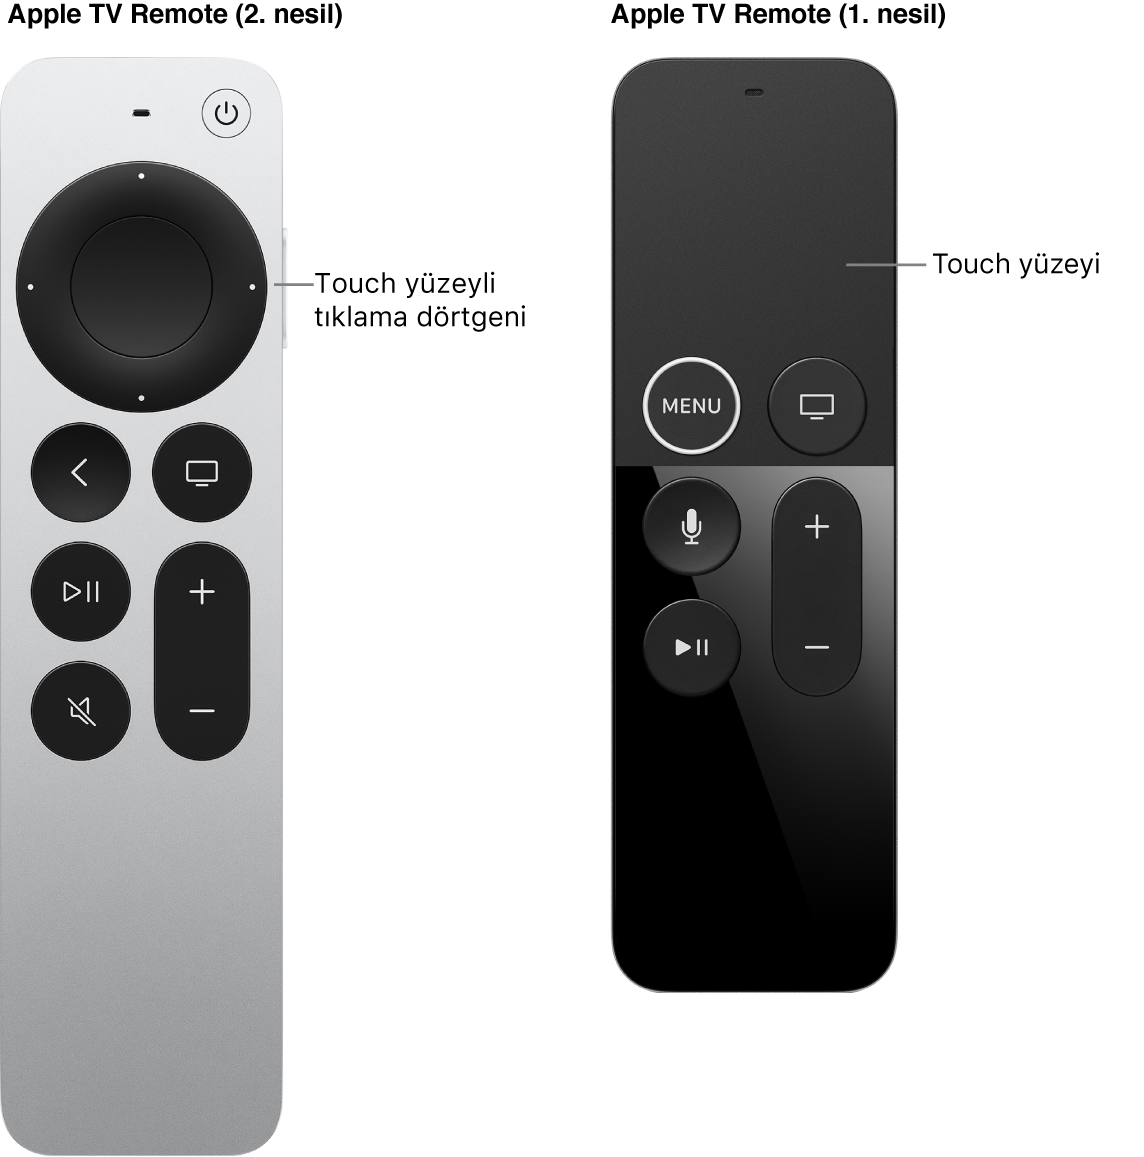 Tıklama dörtgenine sahip Apple TV Remote (2. nesil) ve dokunmatik yüzeye sahip Apple TV Remote (1. nesil)